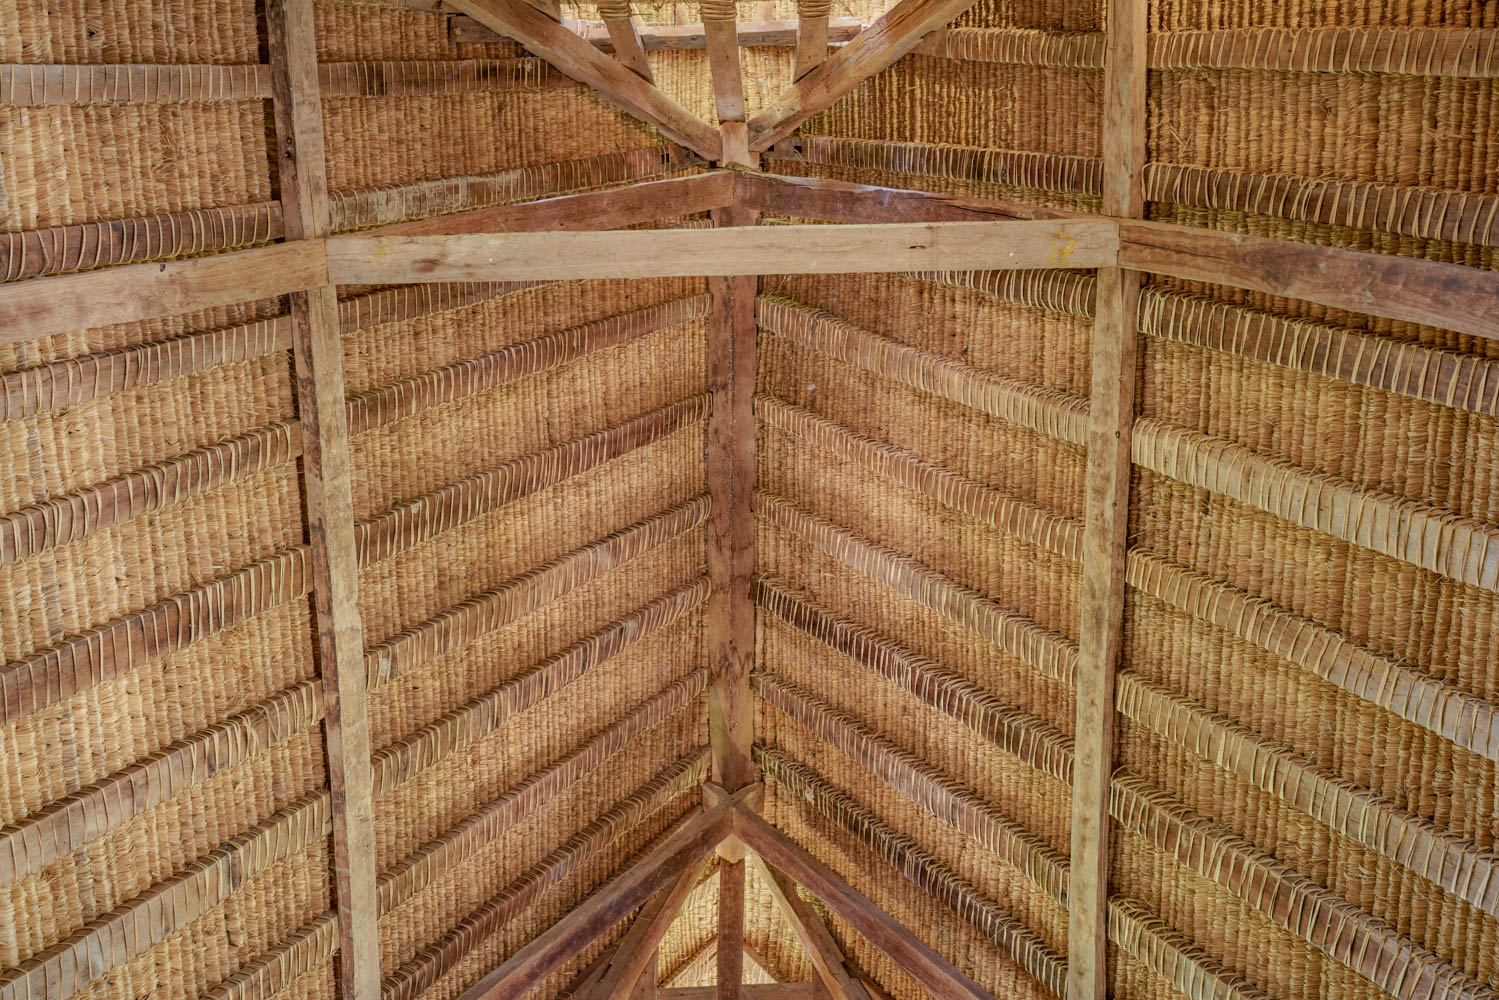 handmade grass roof "alang-alang"